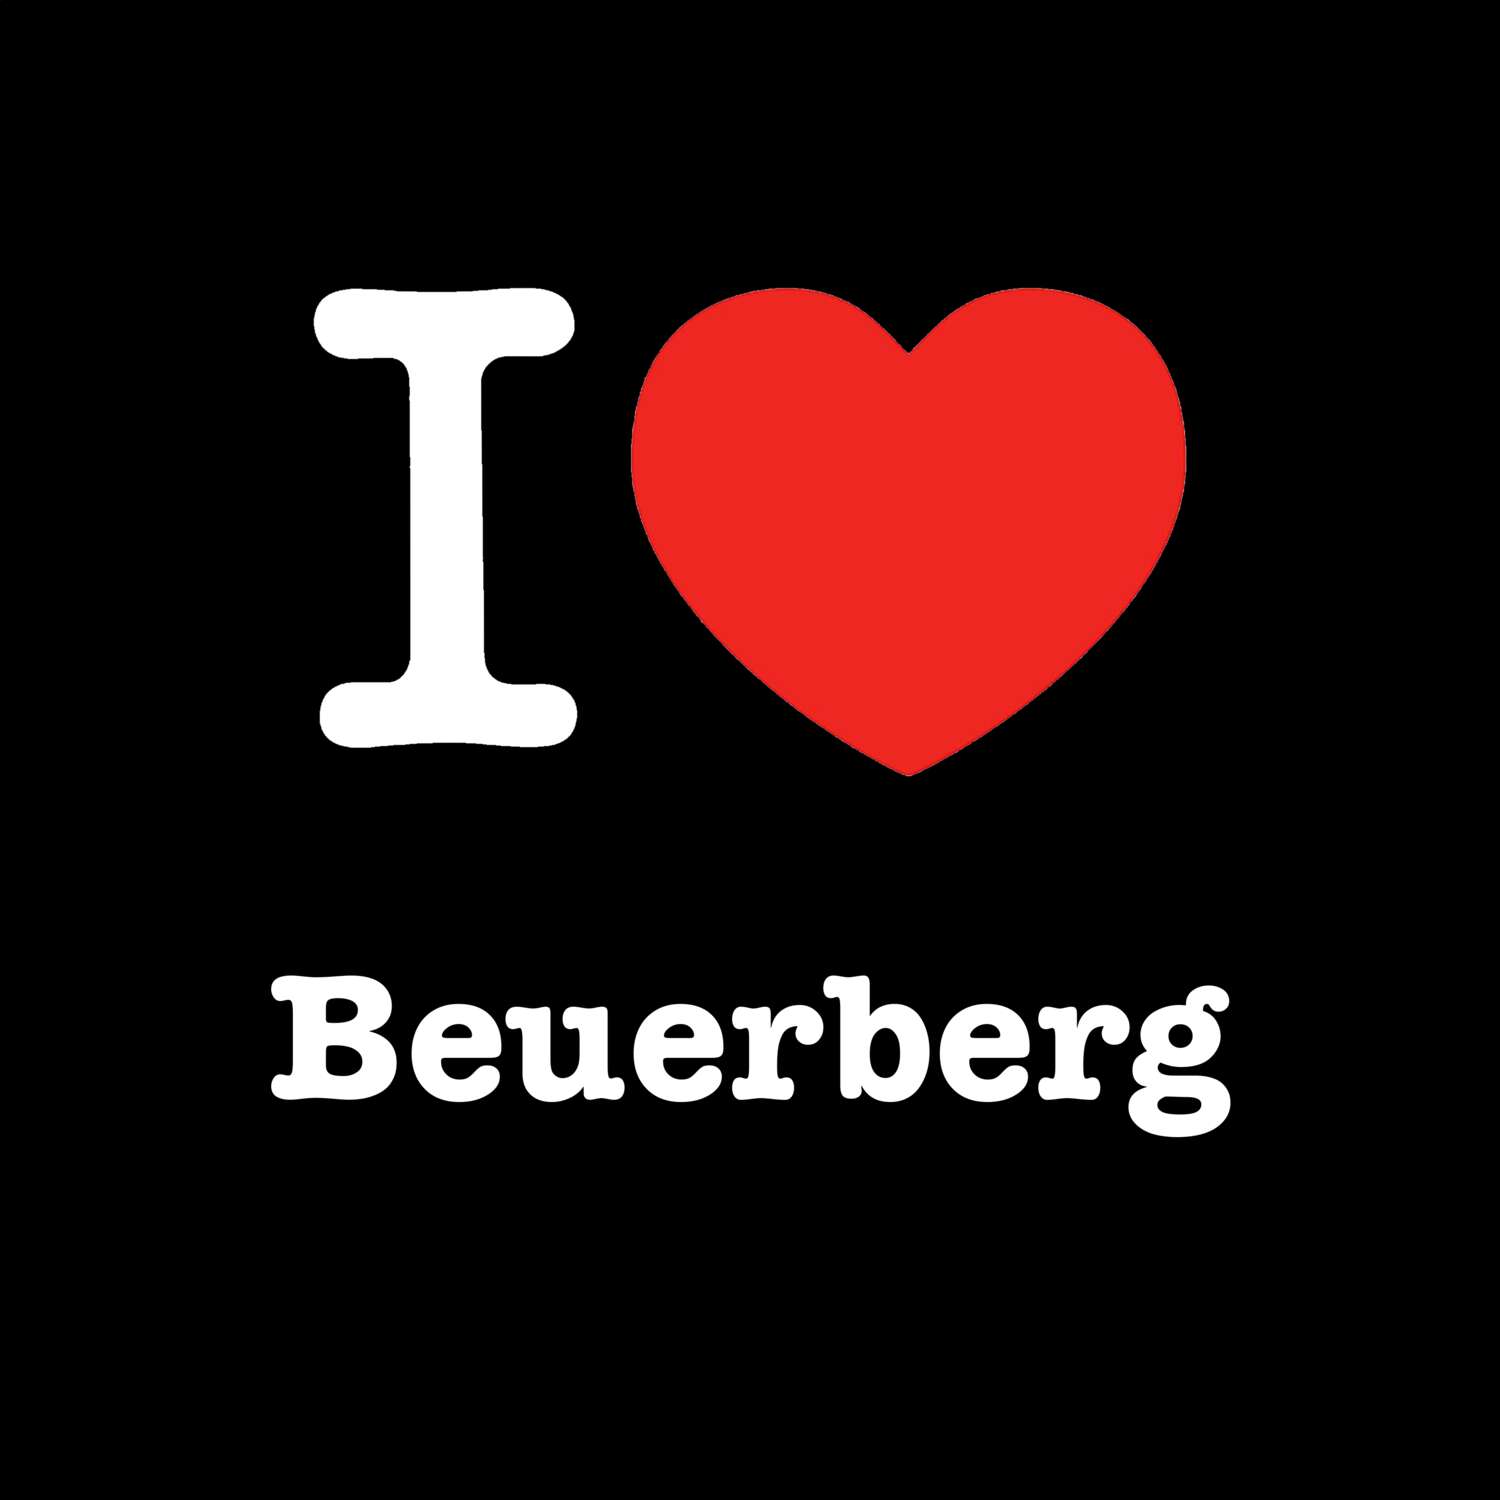 Beuerberg T-Shirt »I love«